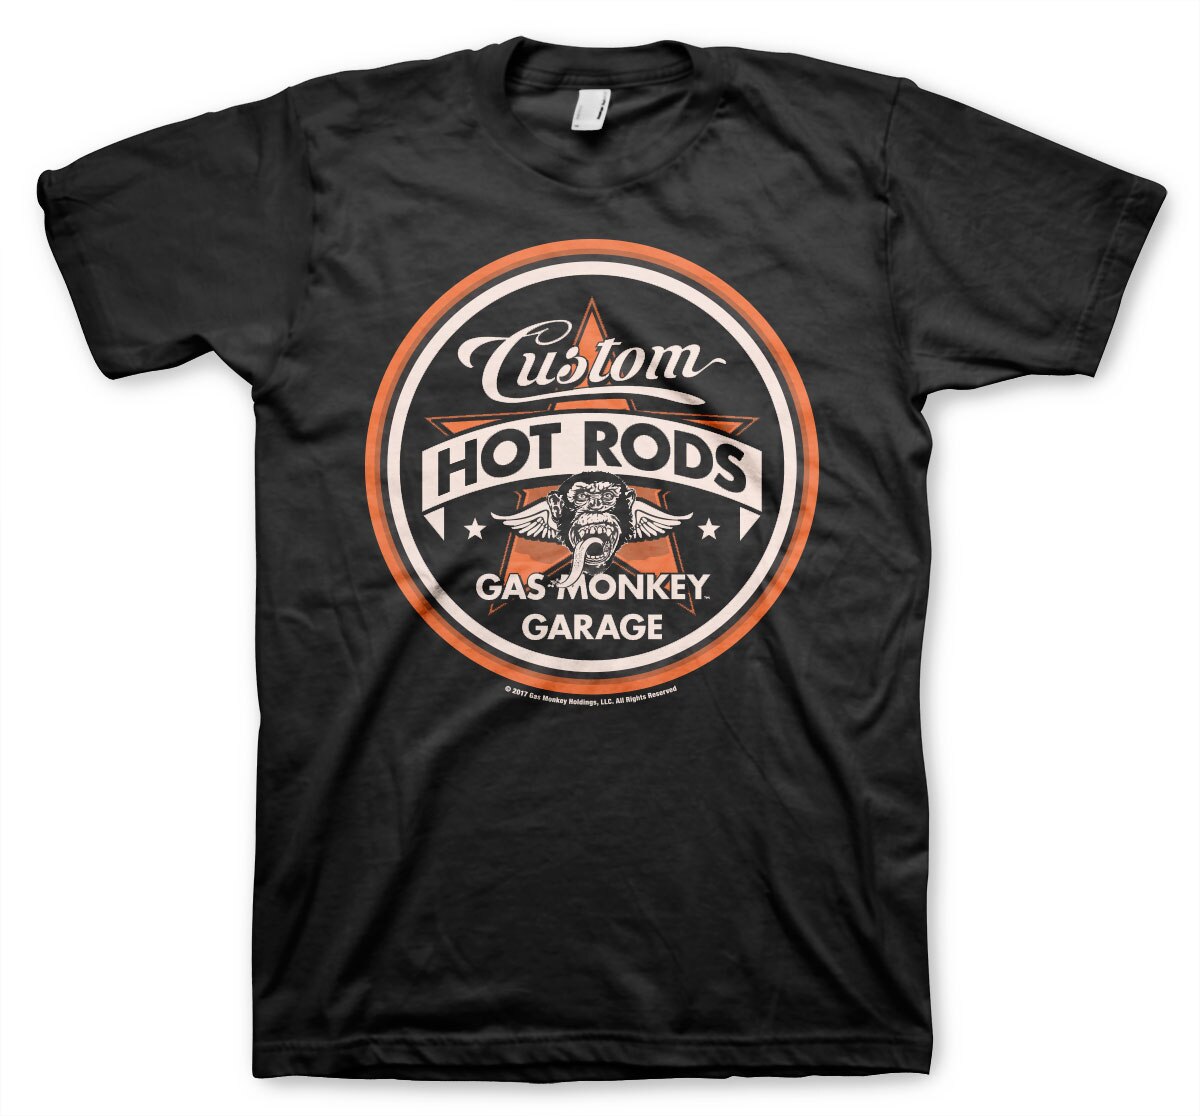 Gas Monkey Garage Custom Hot Rods T-Shirt